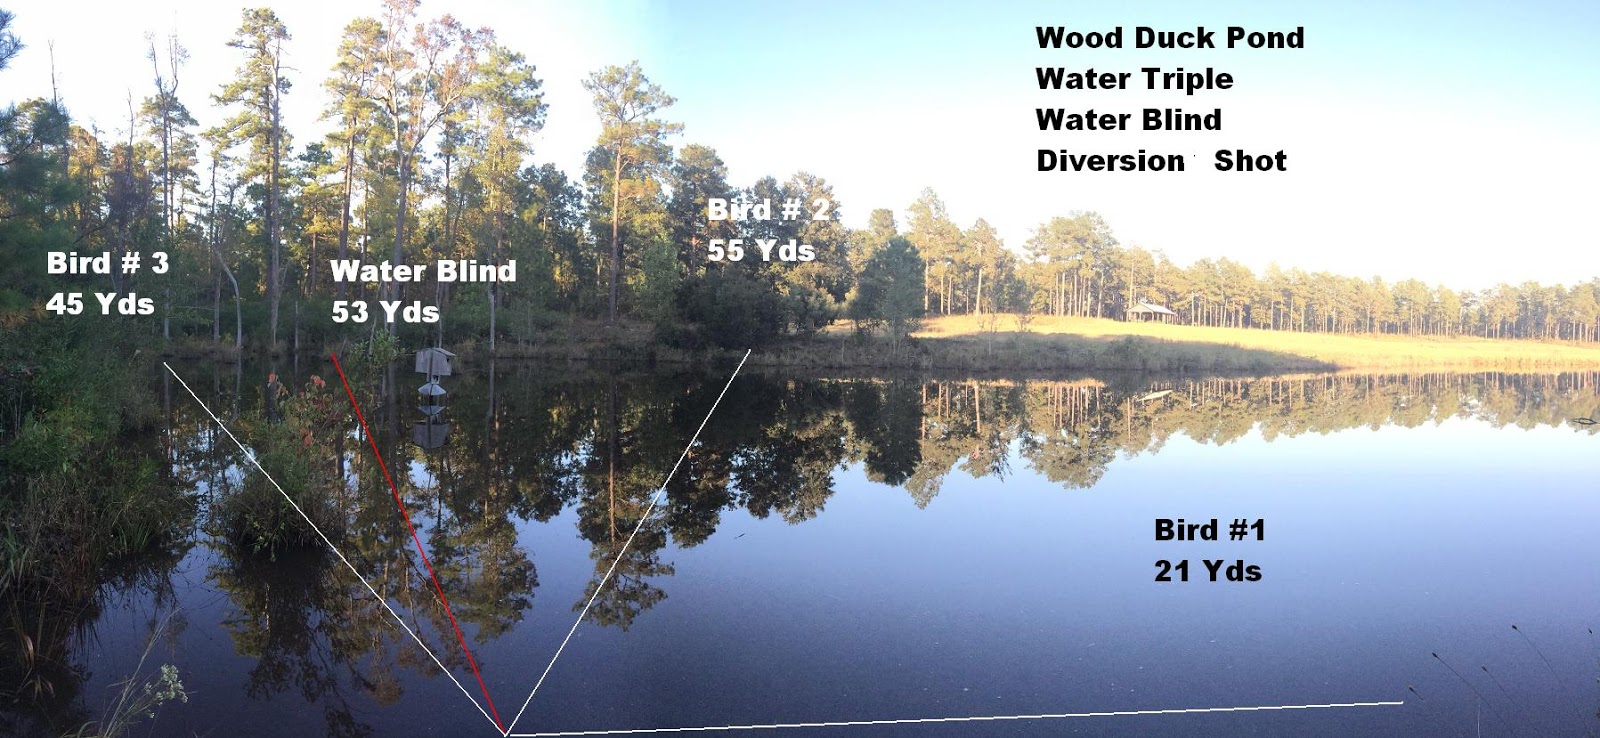 Wood Duck Pond Water-Final (1)